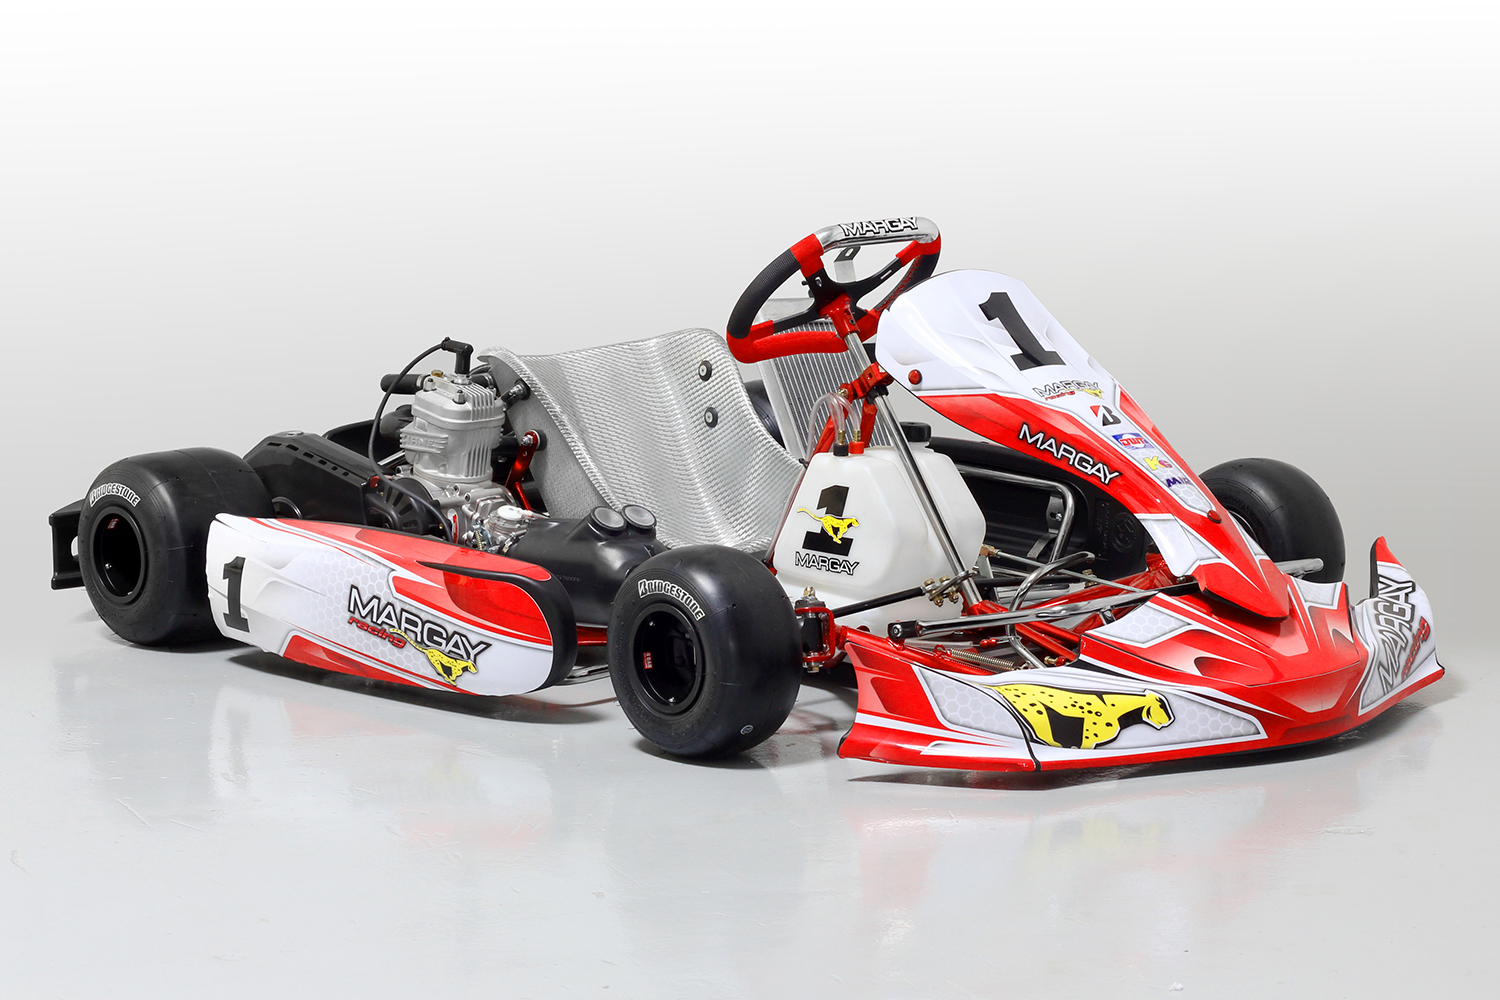 Kart Racing Machines | KreedOn